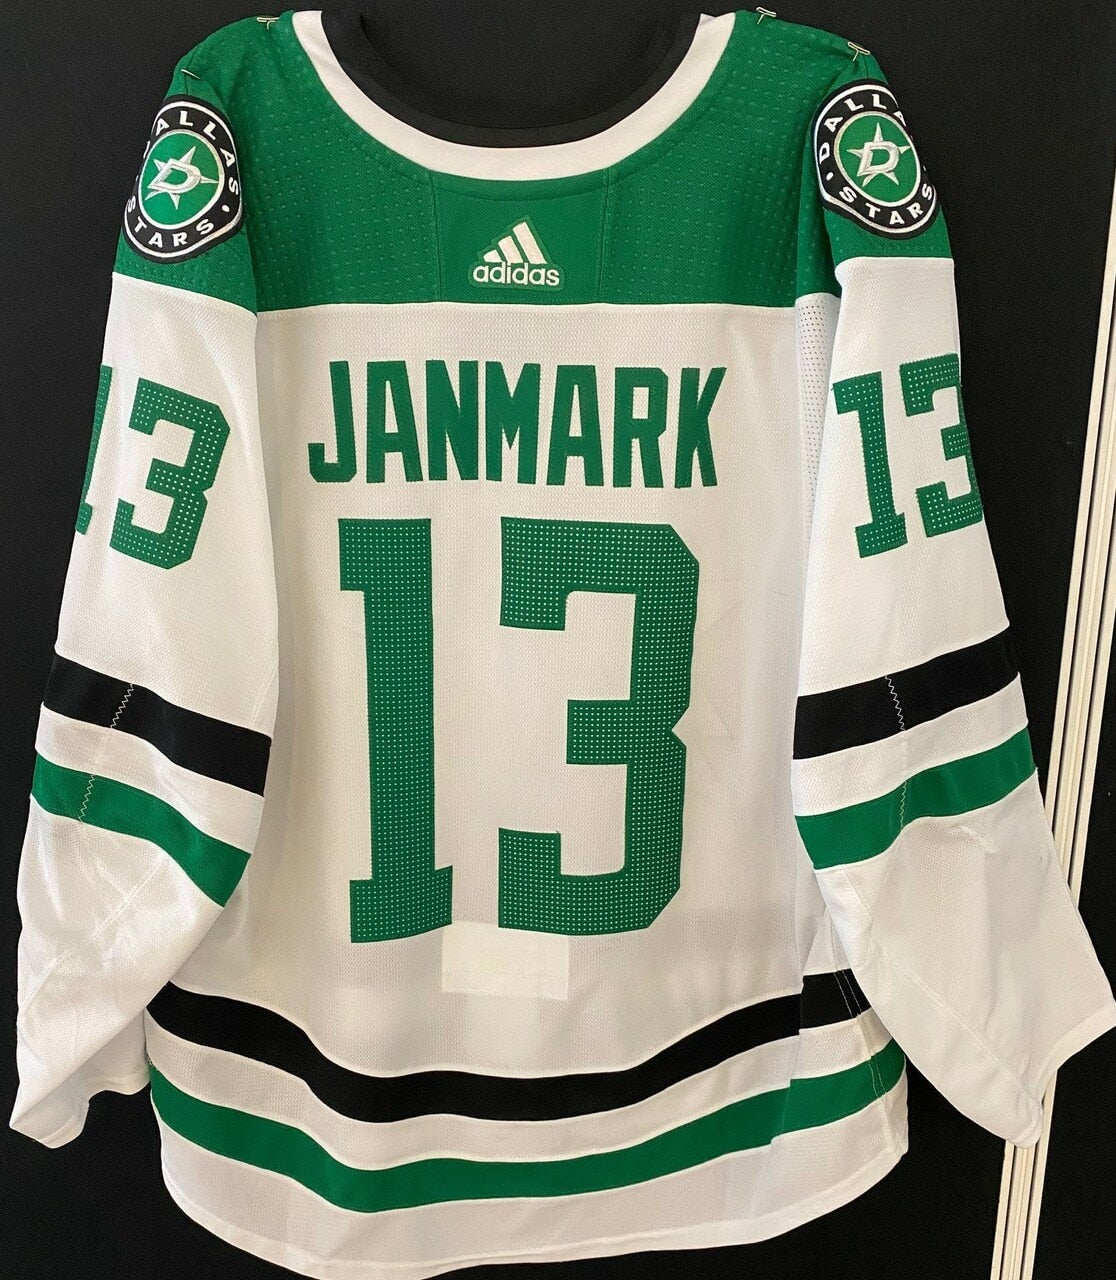 Closer view of each new uniform : r/hockey